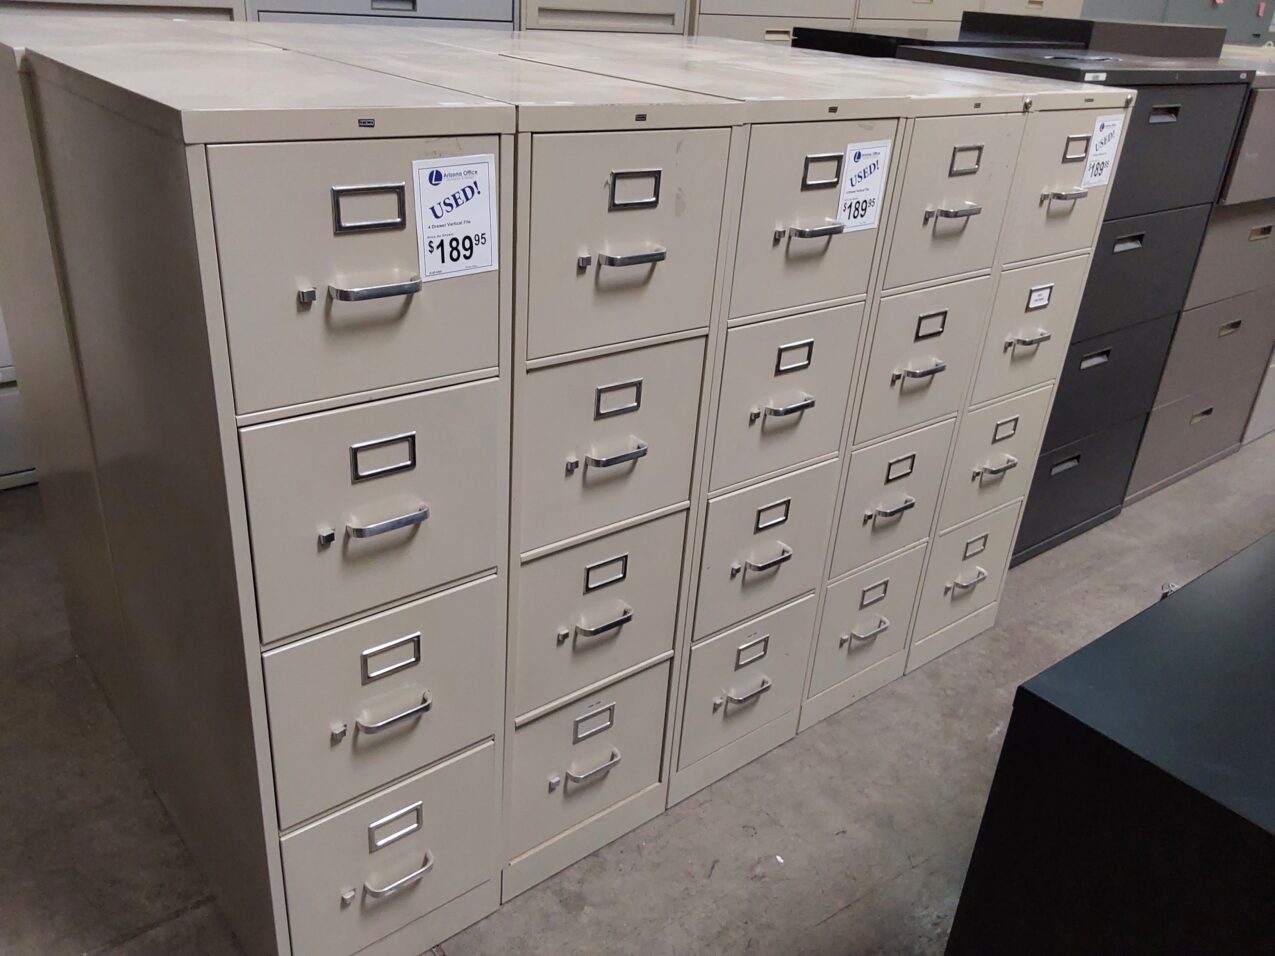 4 drawer vertical file